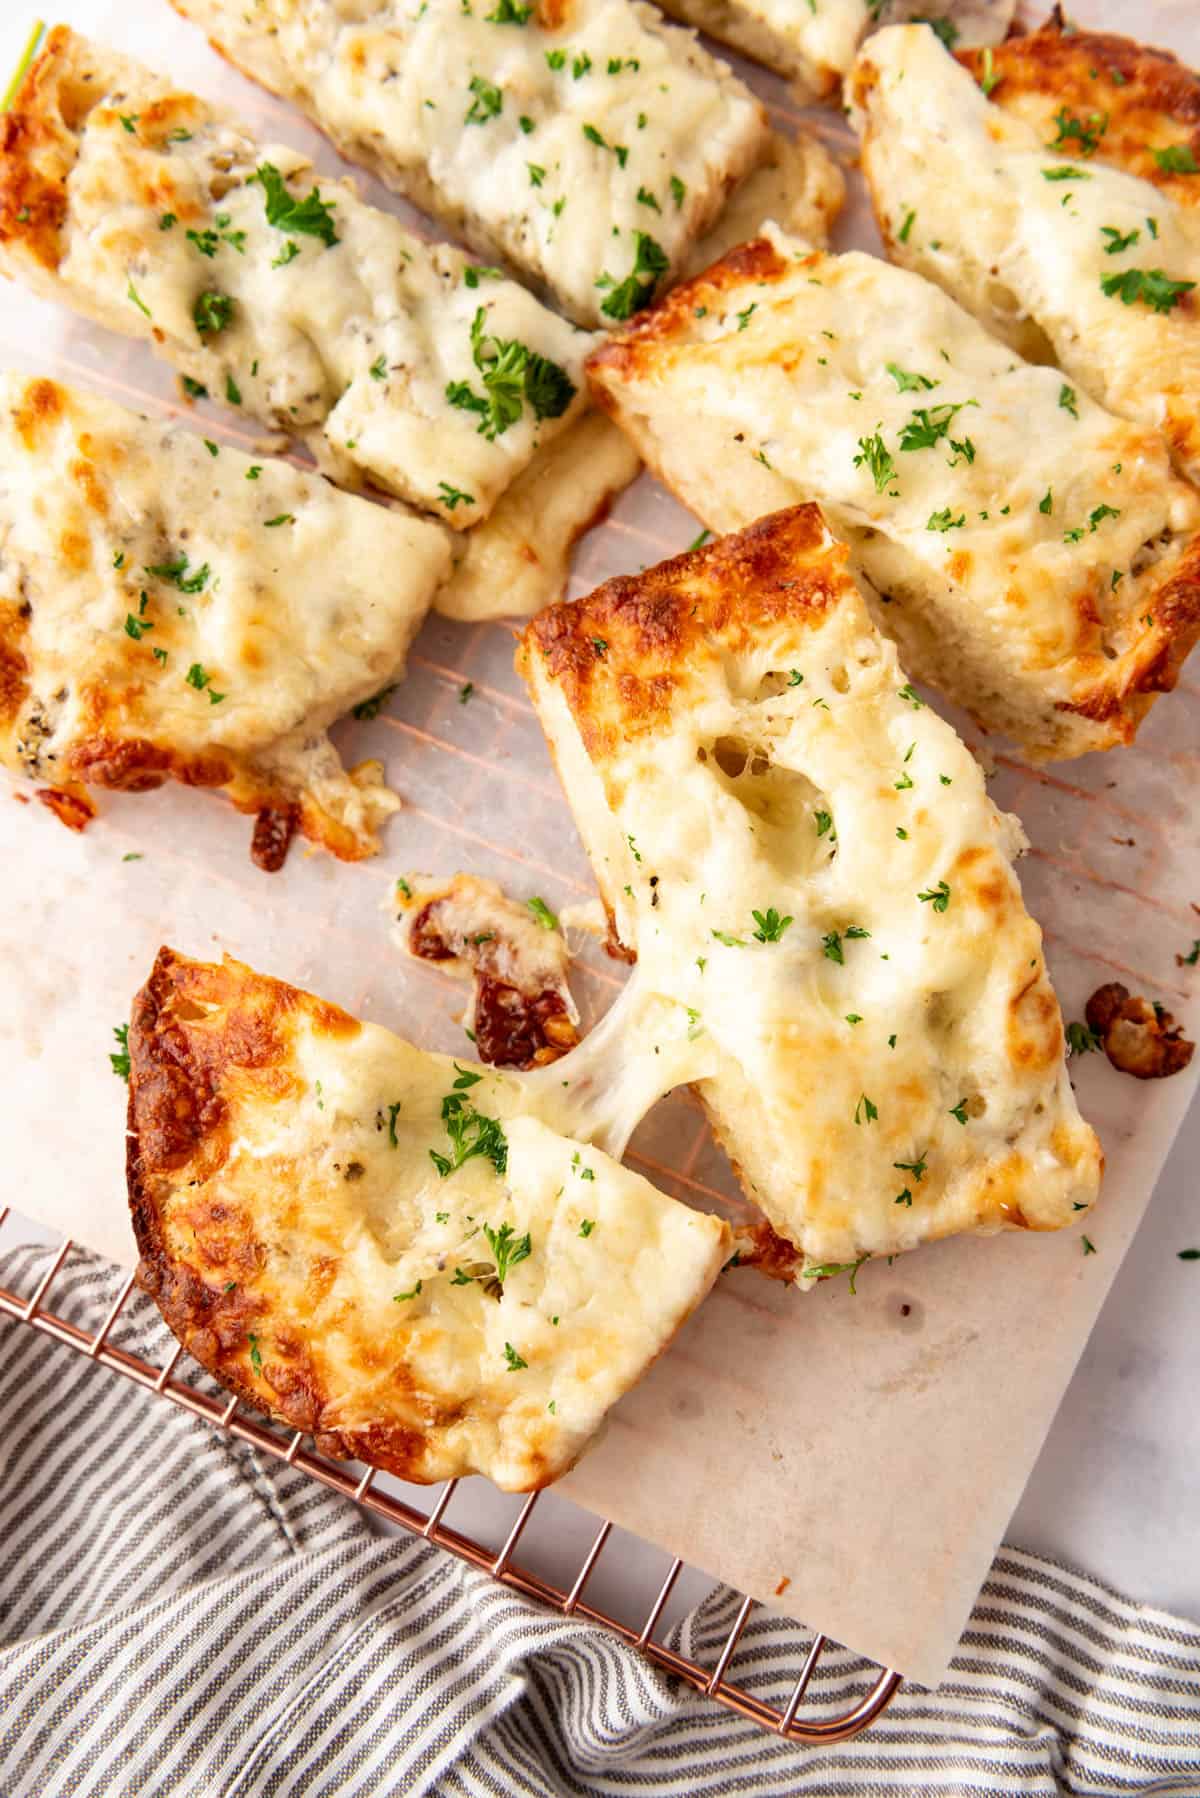 Garlic bread with mozzarella cheese.